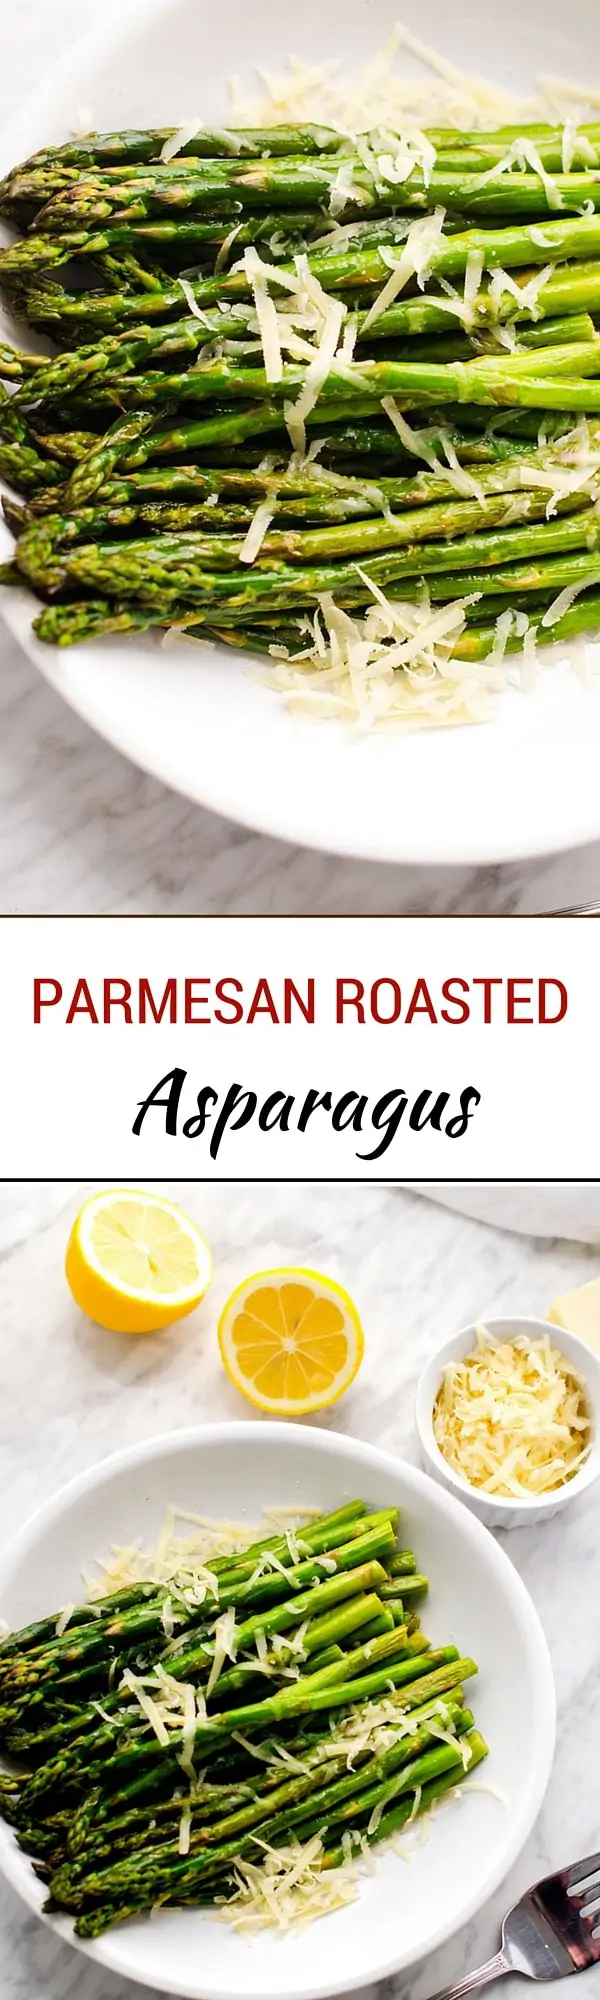 Parmesan Roasted Asparagus - WendyPolisi.com